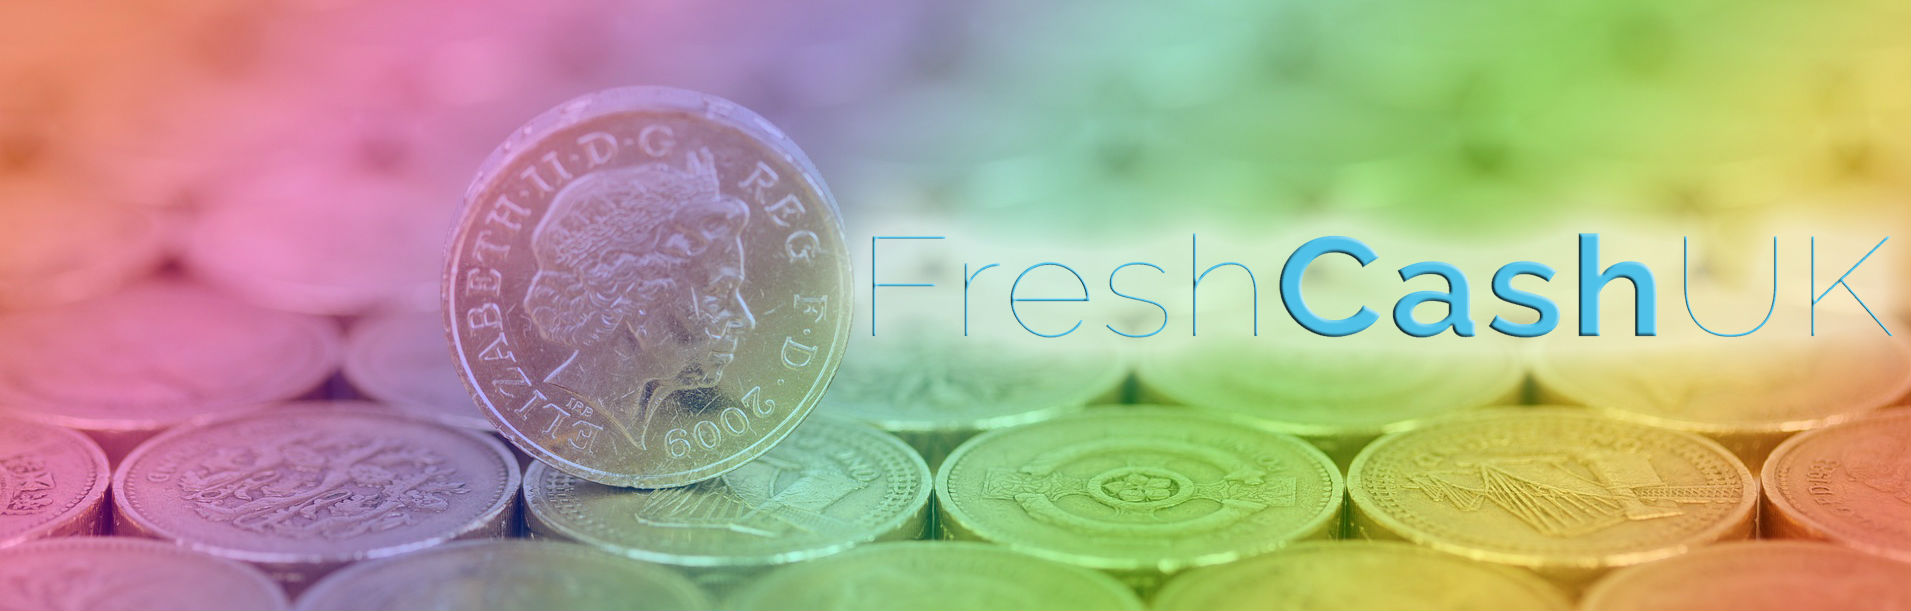 Fresh Cash Personal Finance Blog